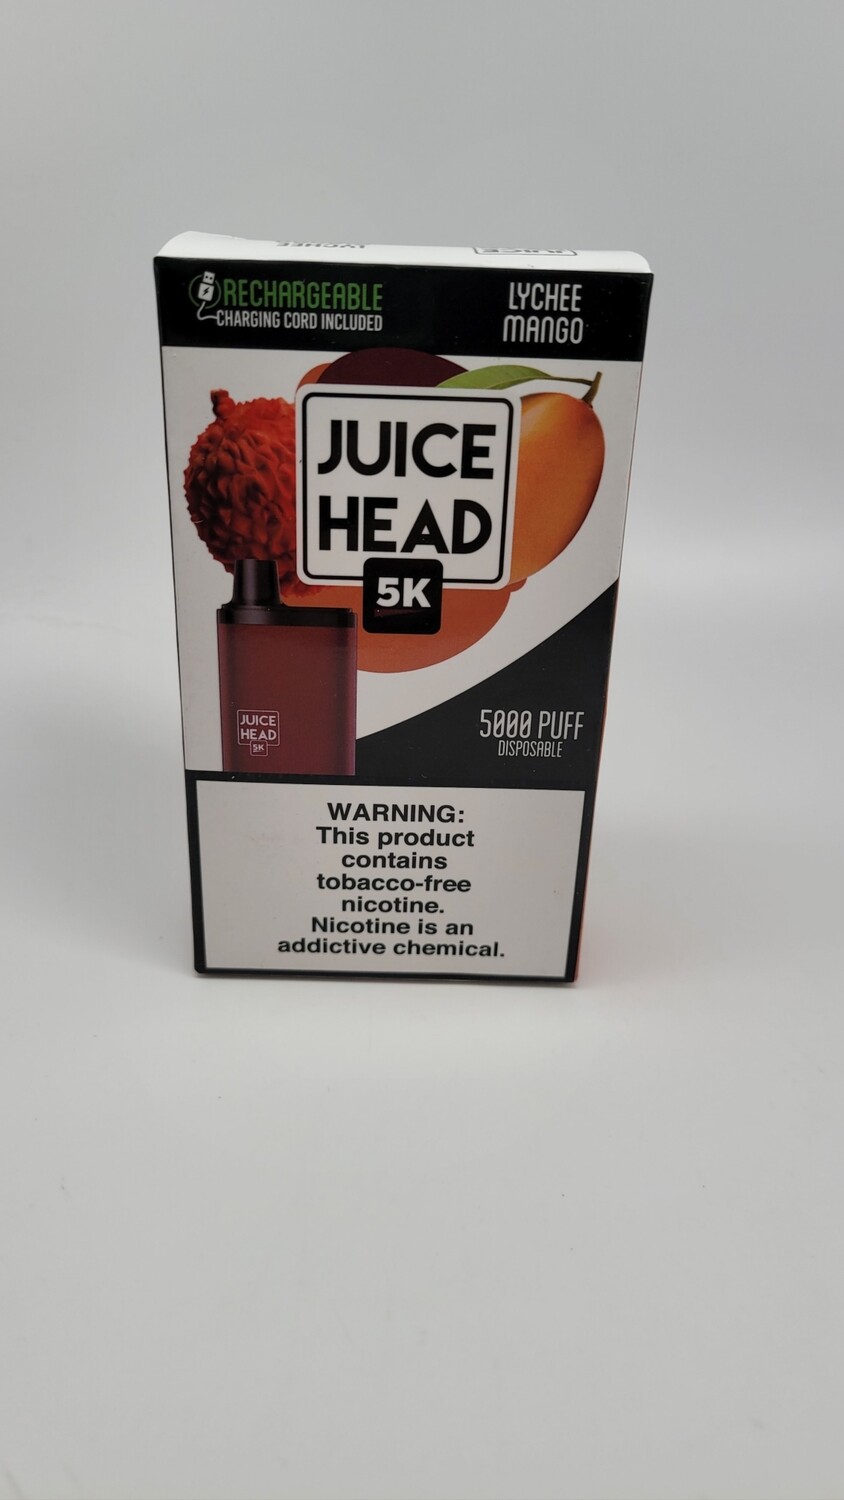 Juice Head 5K Disposable Lychee Mango